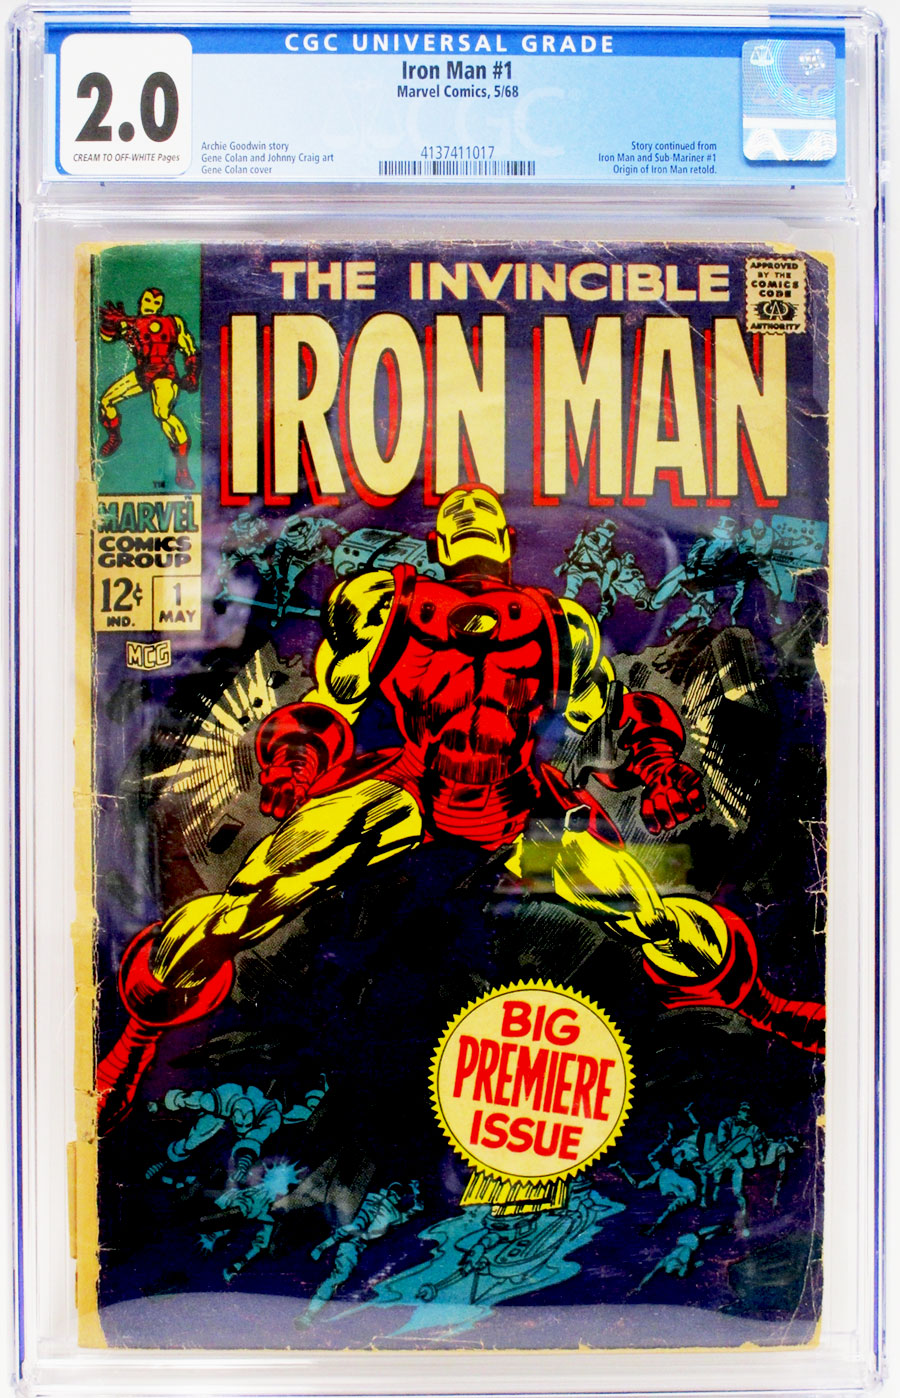 Iron Man #1 Cover E CGC 2.0